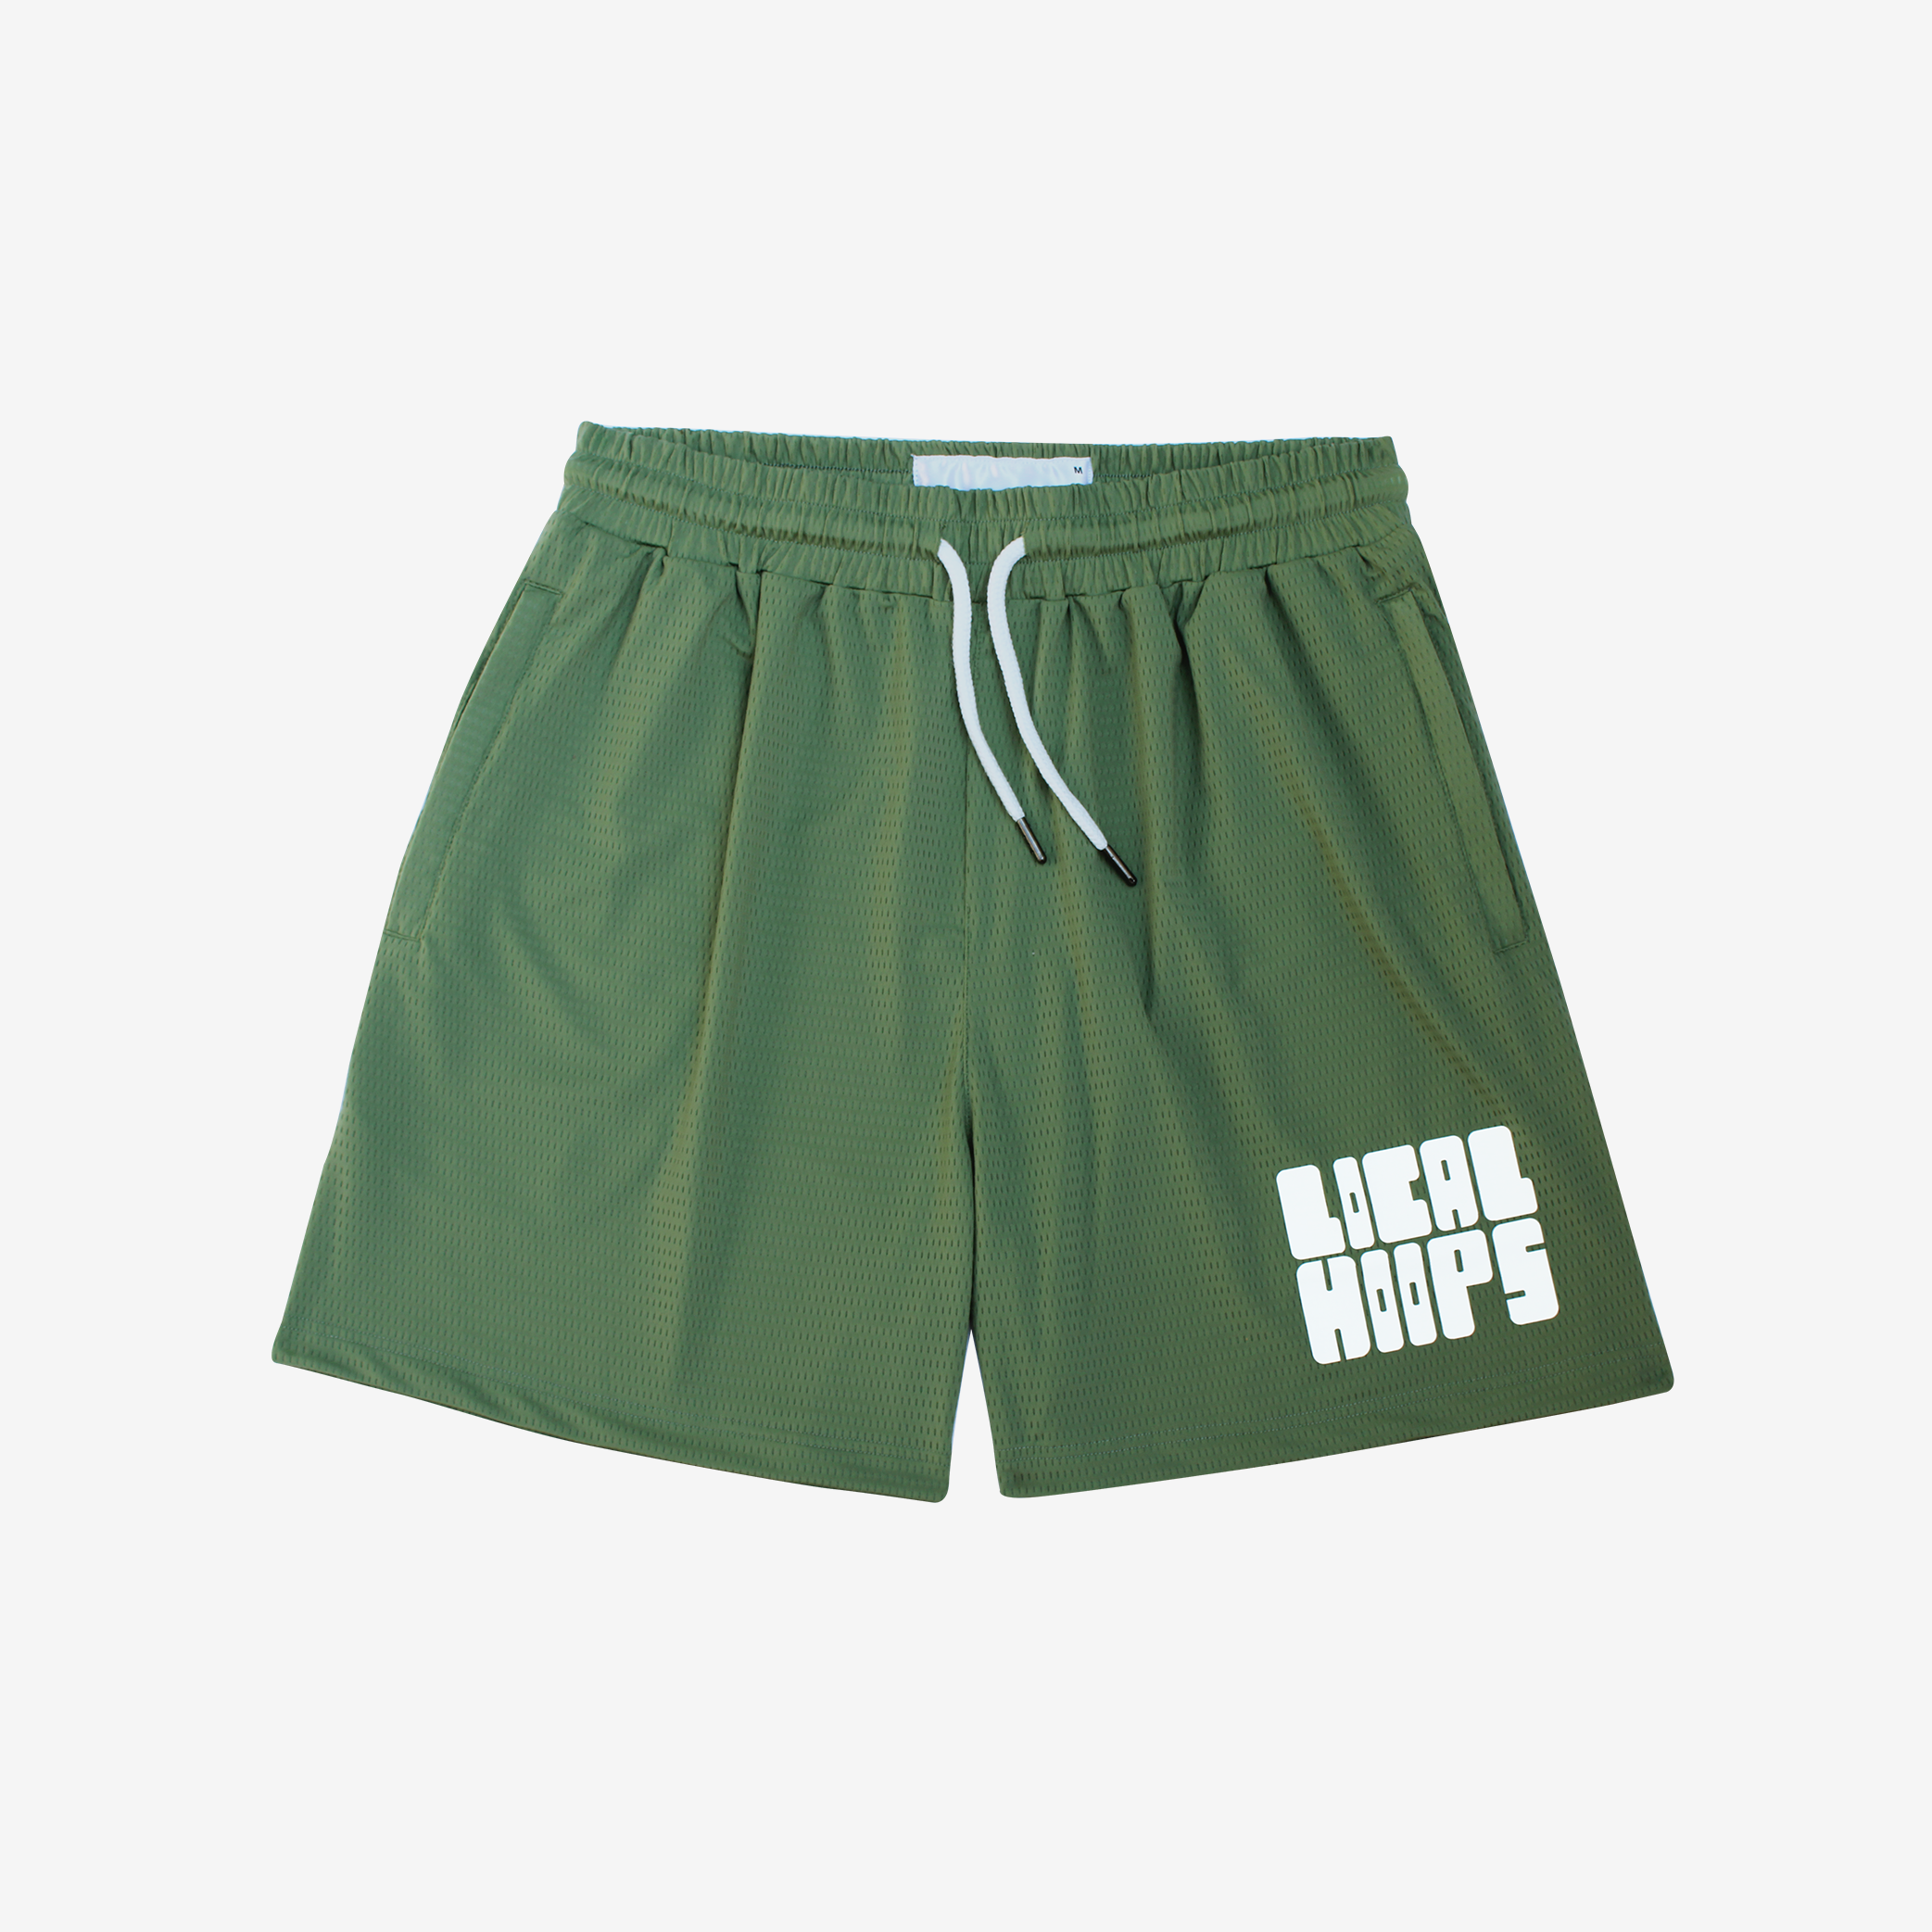 Green Practice Shorts